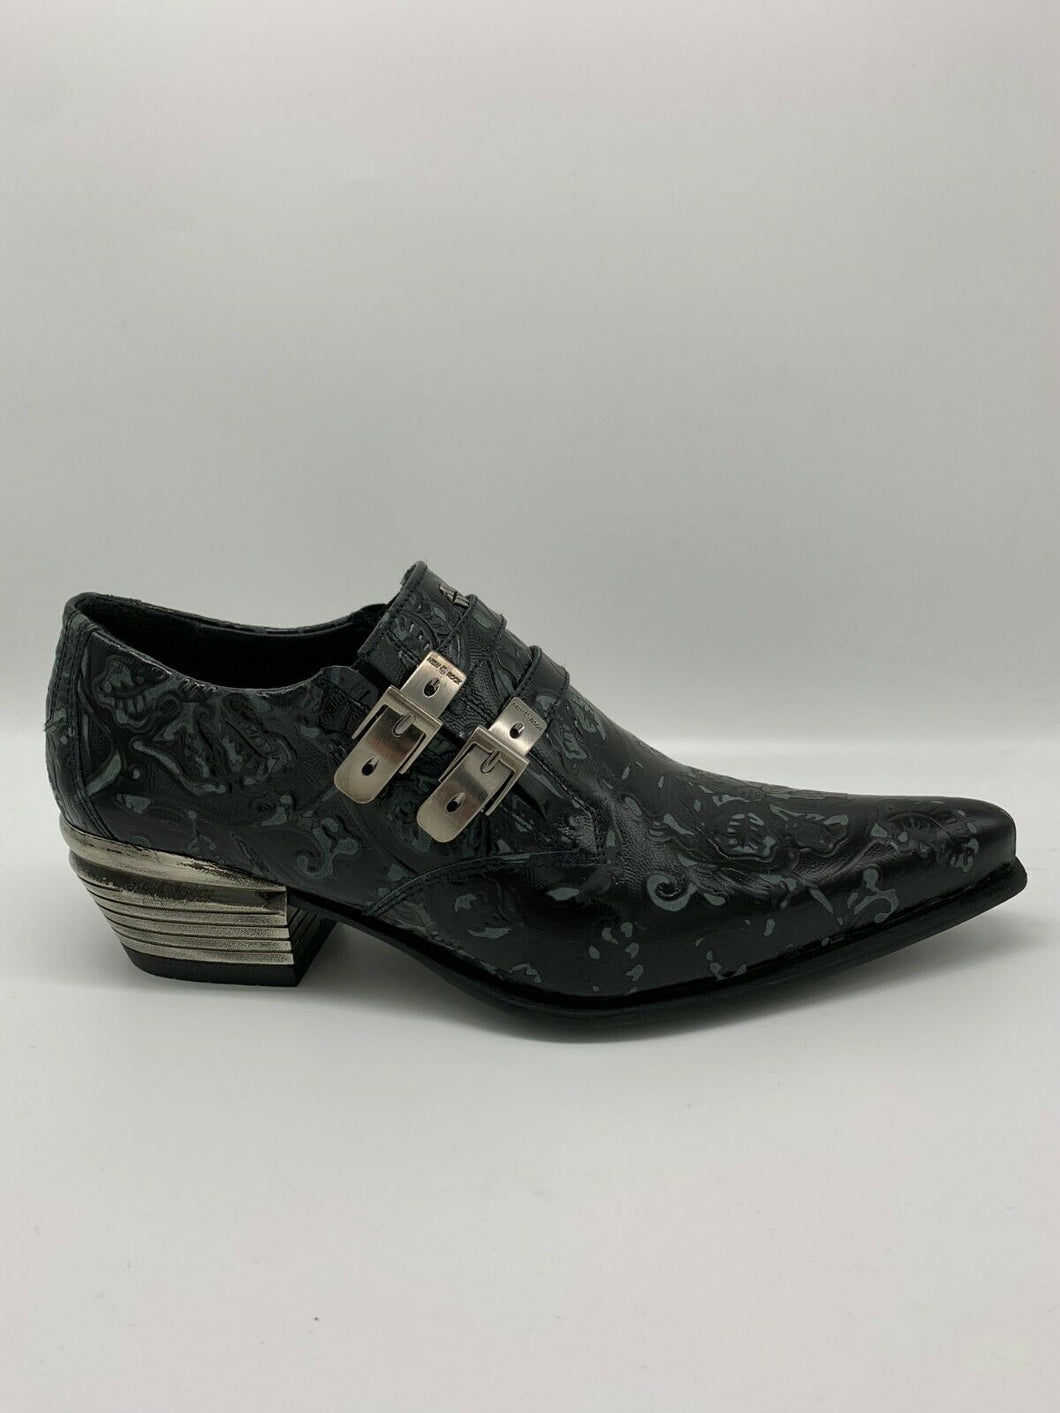 New Rock Schuhe Halbschuhe Herrenschuhe Boots Elegant Echtleder